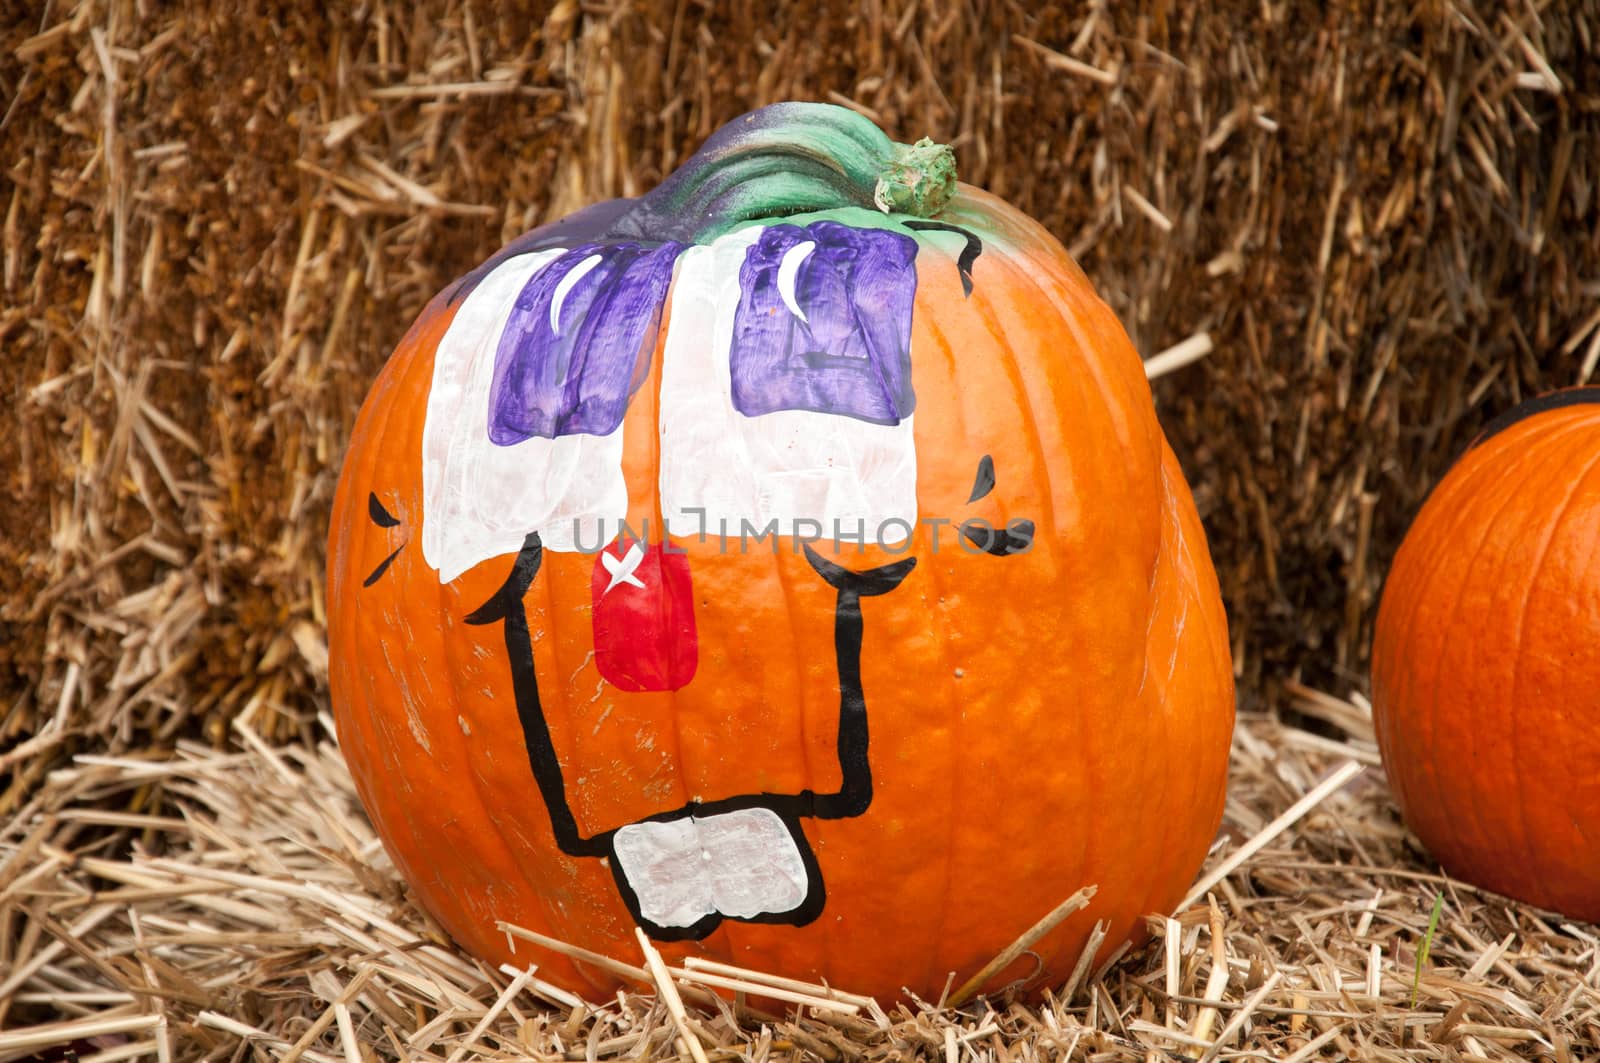 painted pumpkin face by jctabb